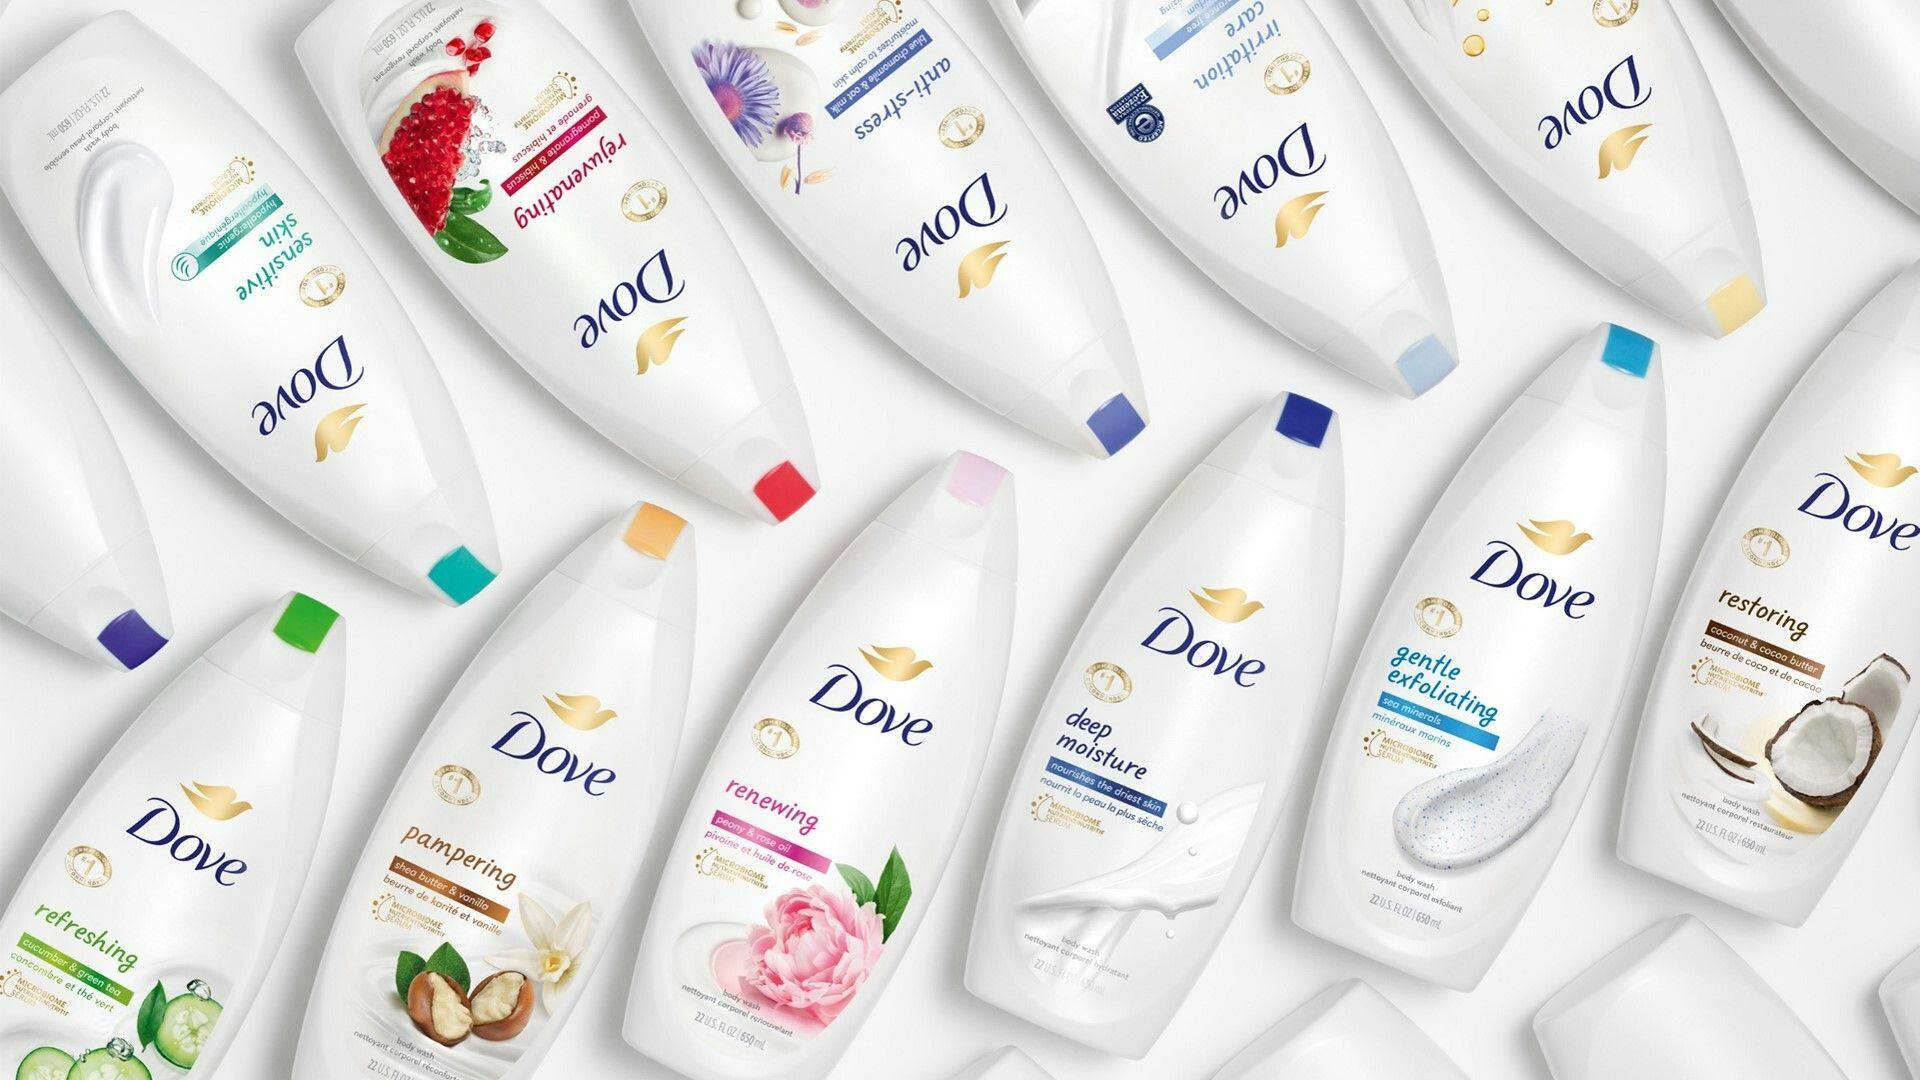 Bottles of Dove body wash